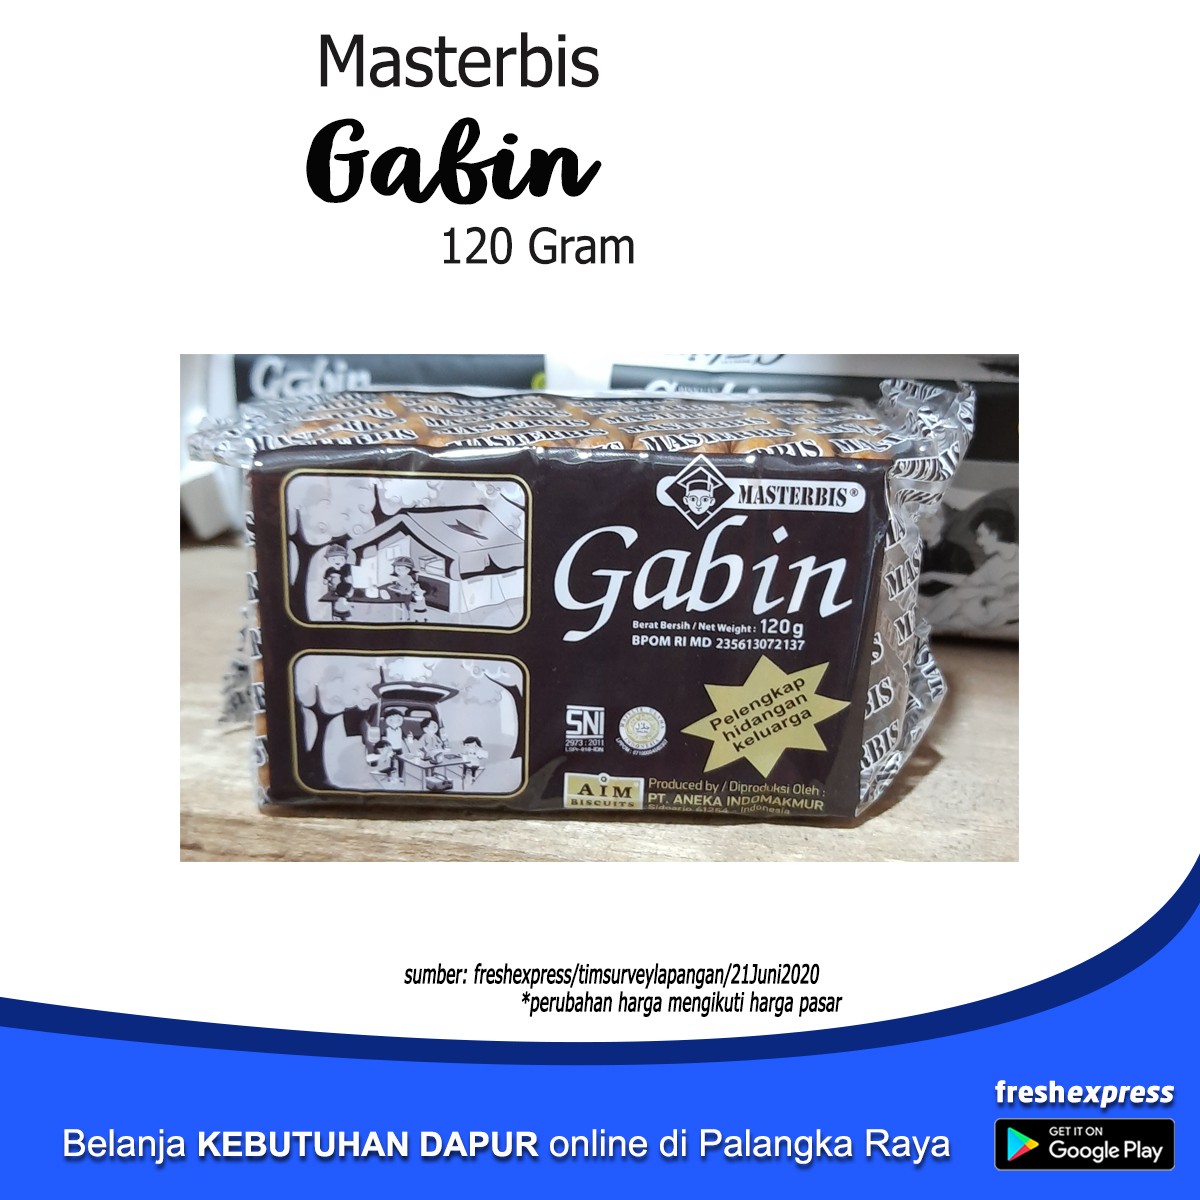 Masterbis Gabin 120 Gram